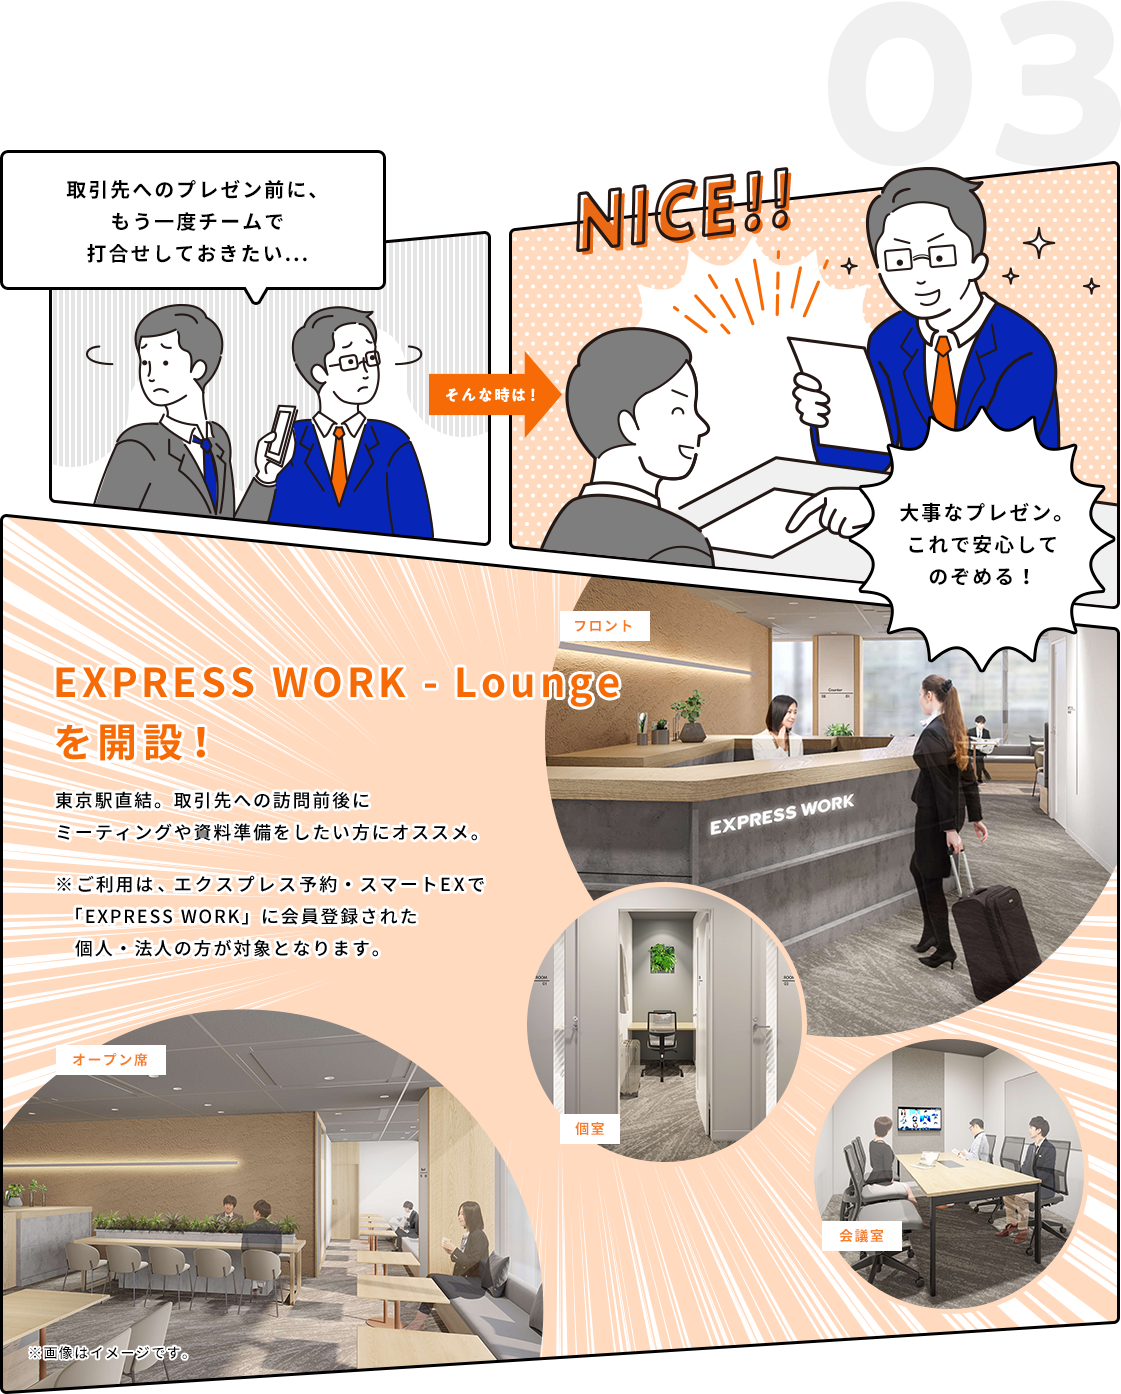 EXPRESS WORK - Loungeを開設！東京駅直結。取引先への訪問前後にミーティングや資料準備をしたい方にオススメ。